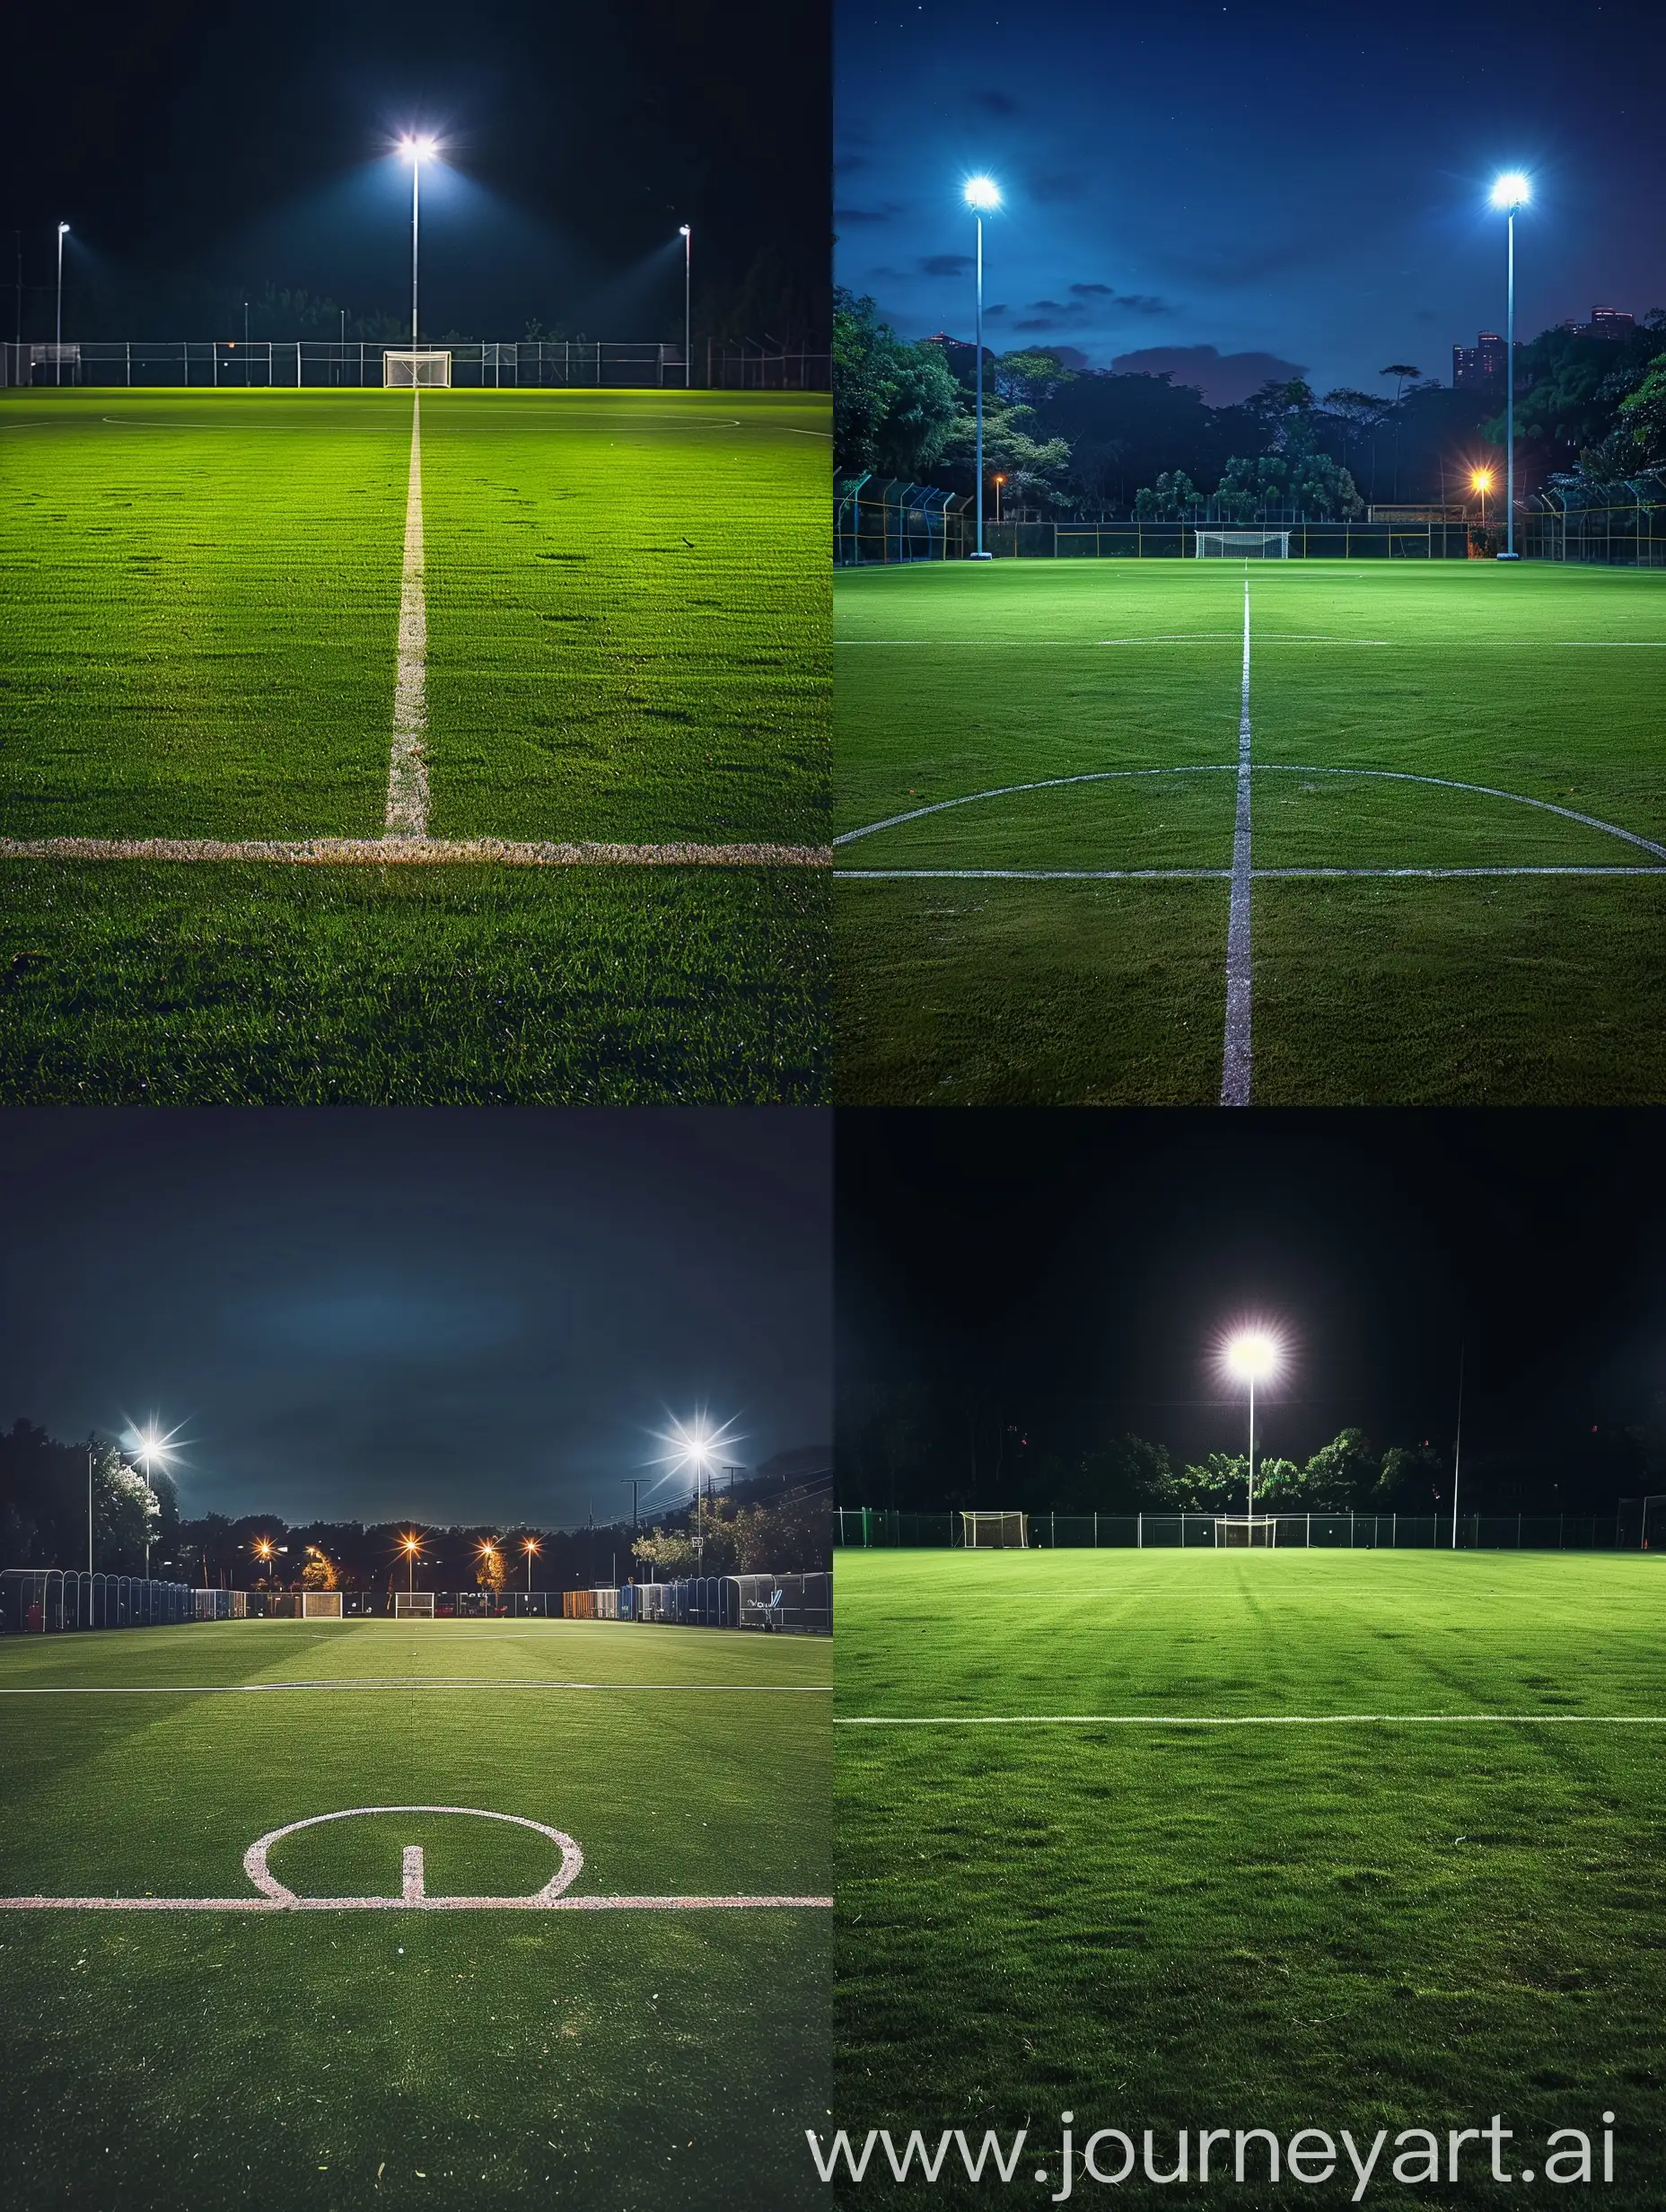 Nighttime-Soccer-Field-Photography-Empty-Stadium-Under-the-Lights